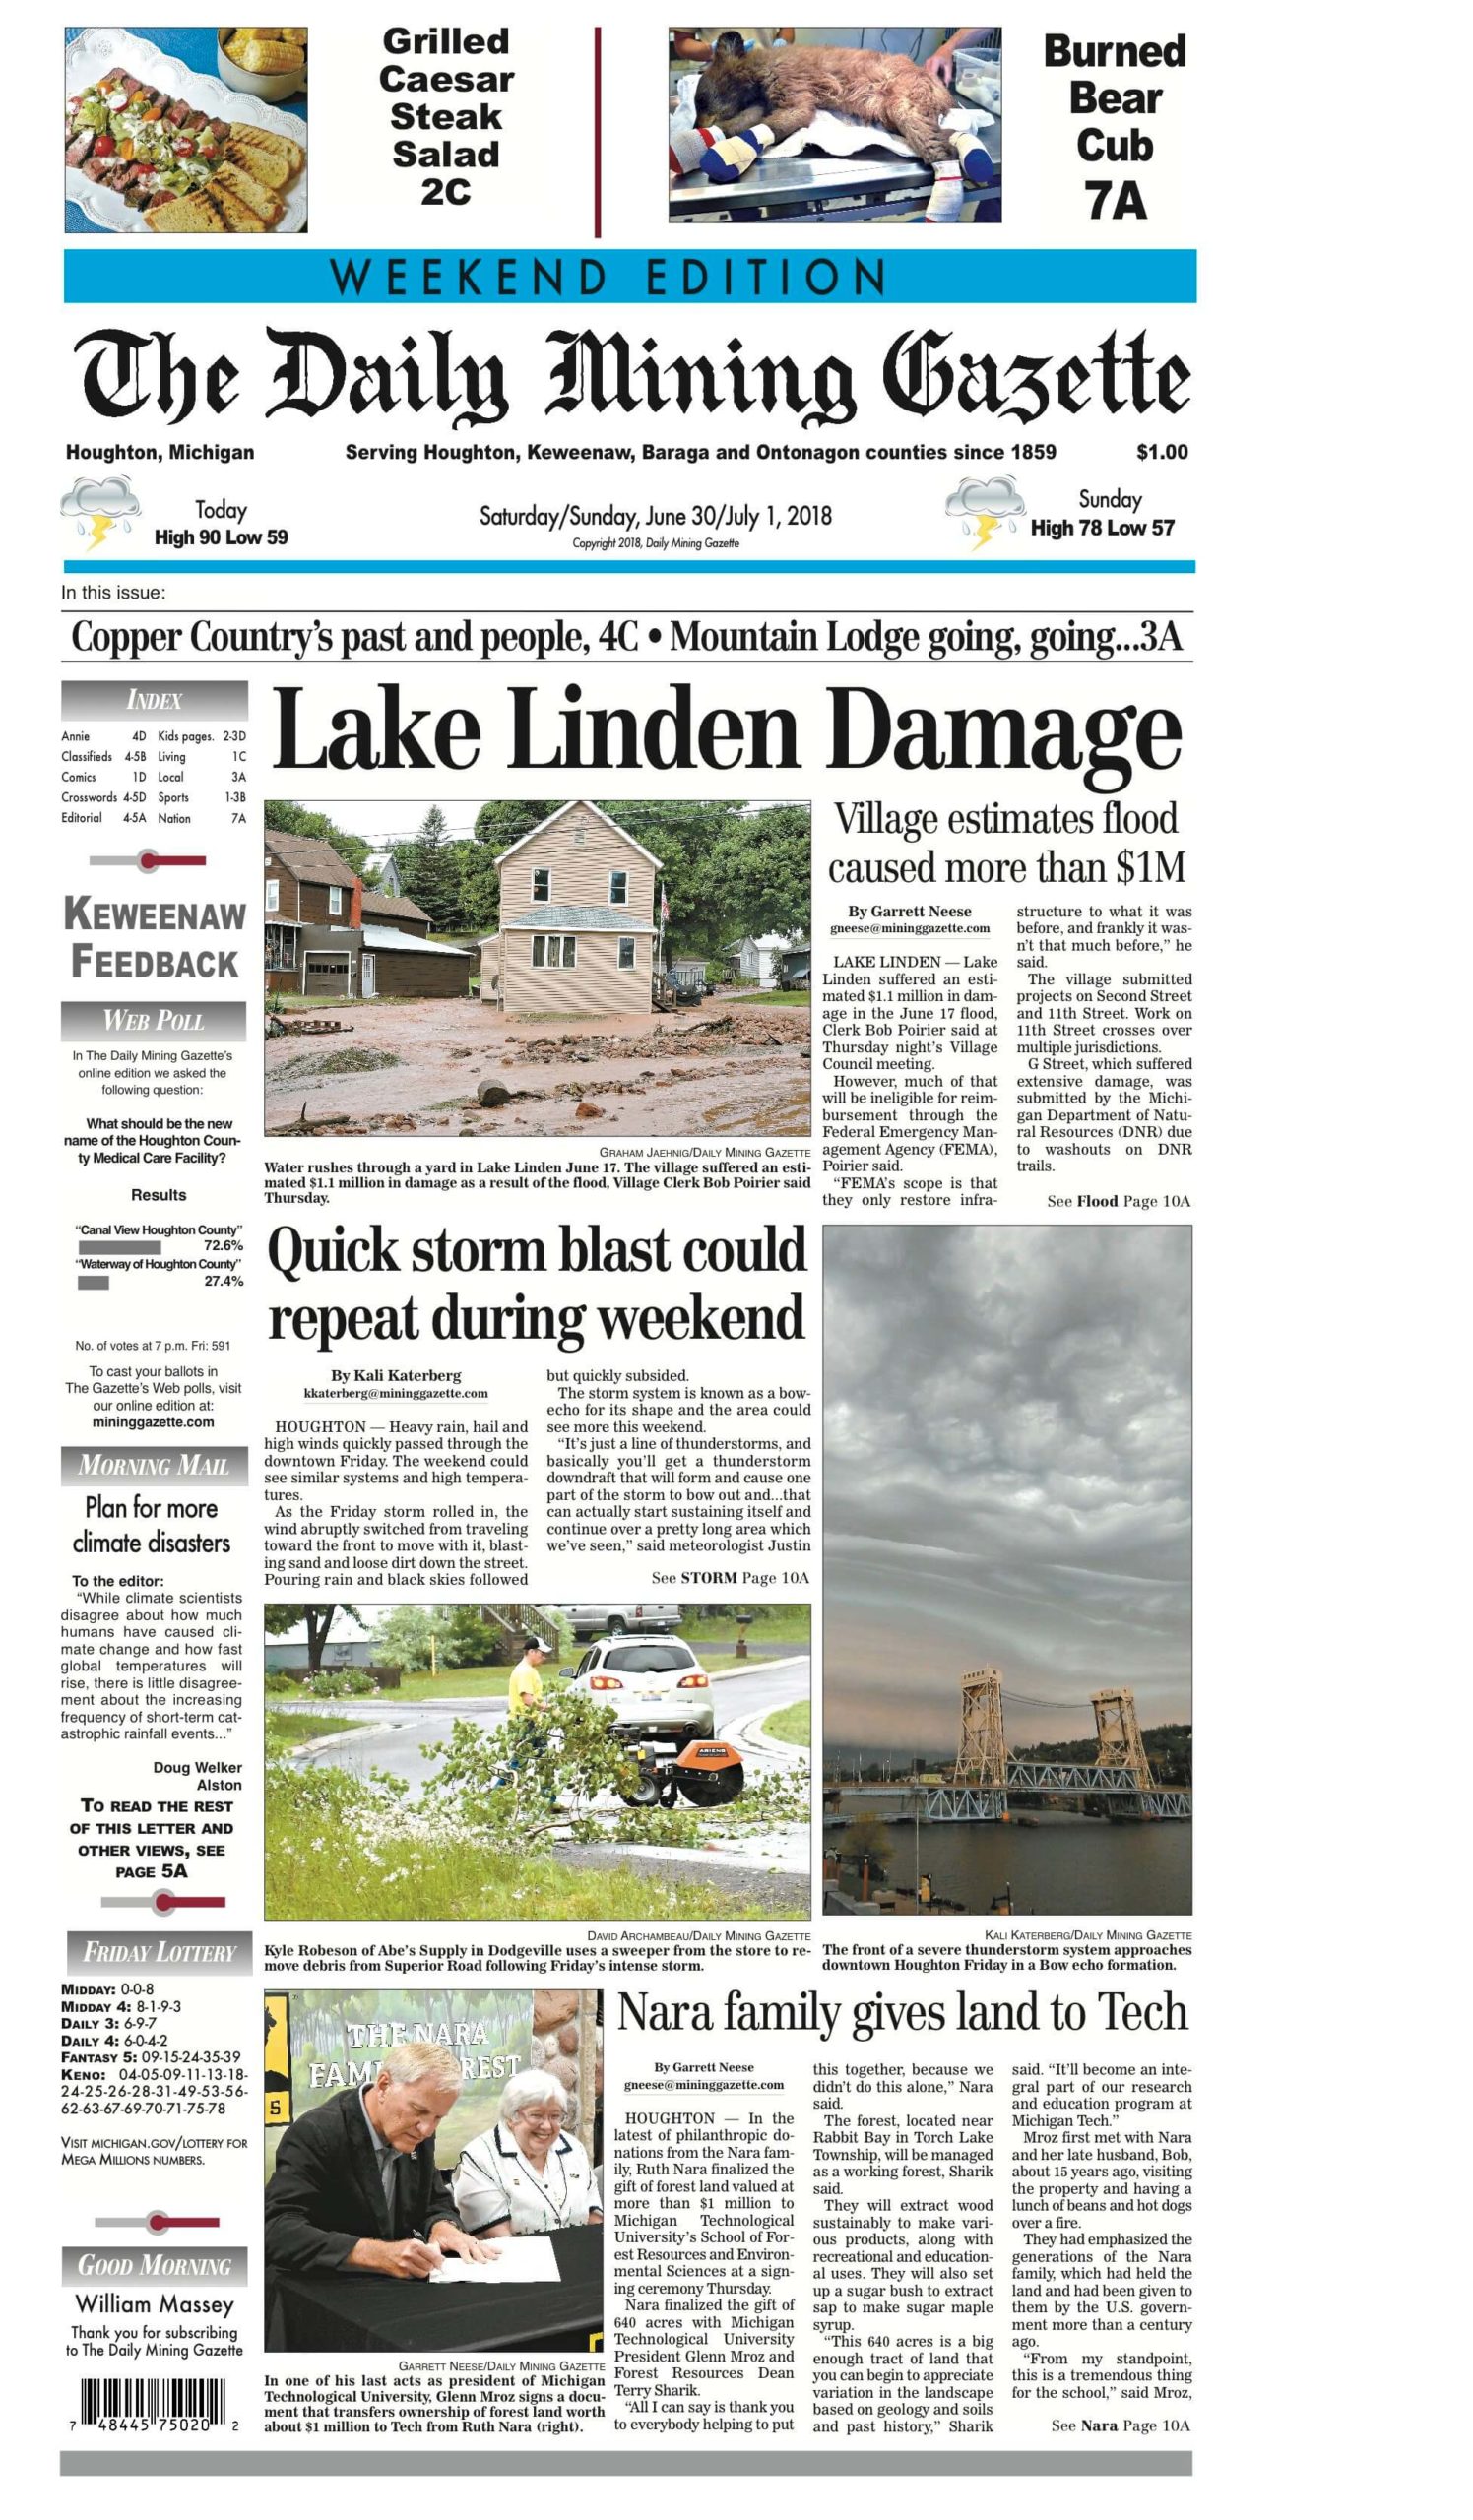 Michigan Newspaper 37 The Daily Mining Gazette scaled